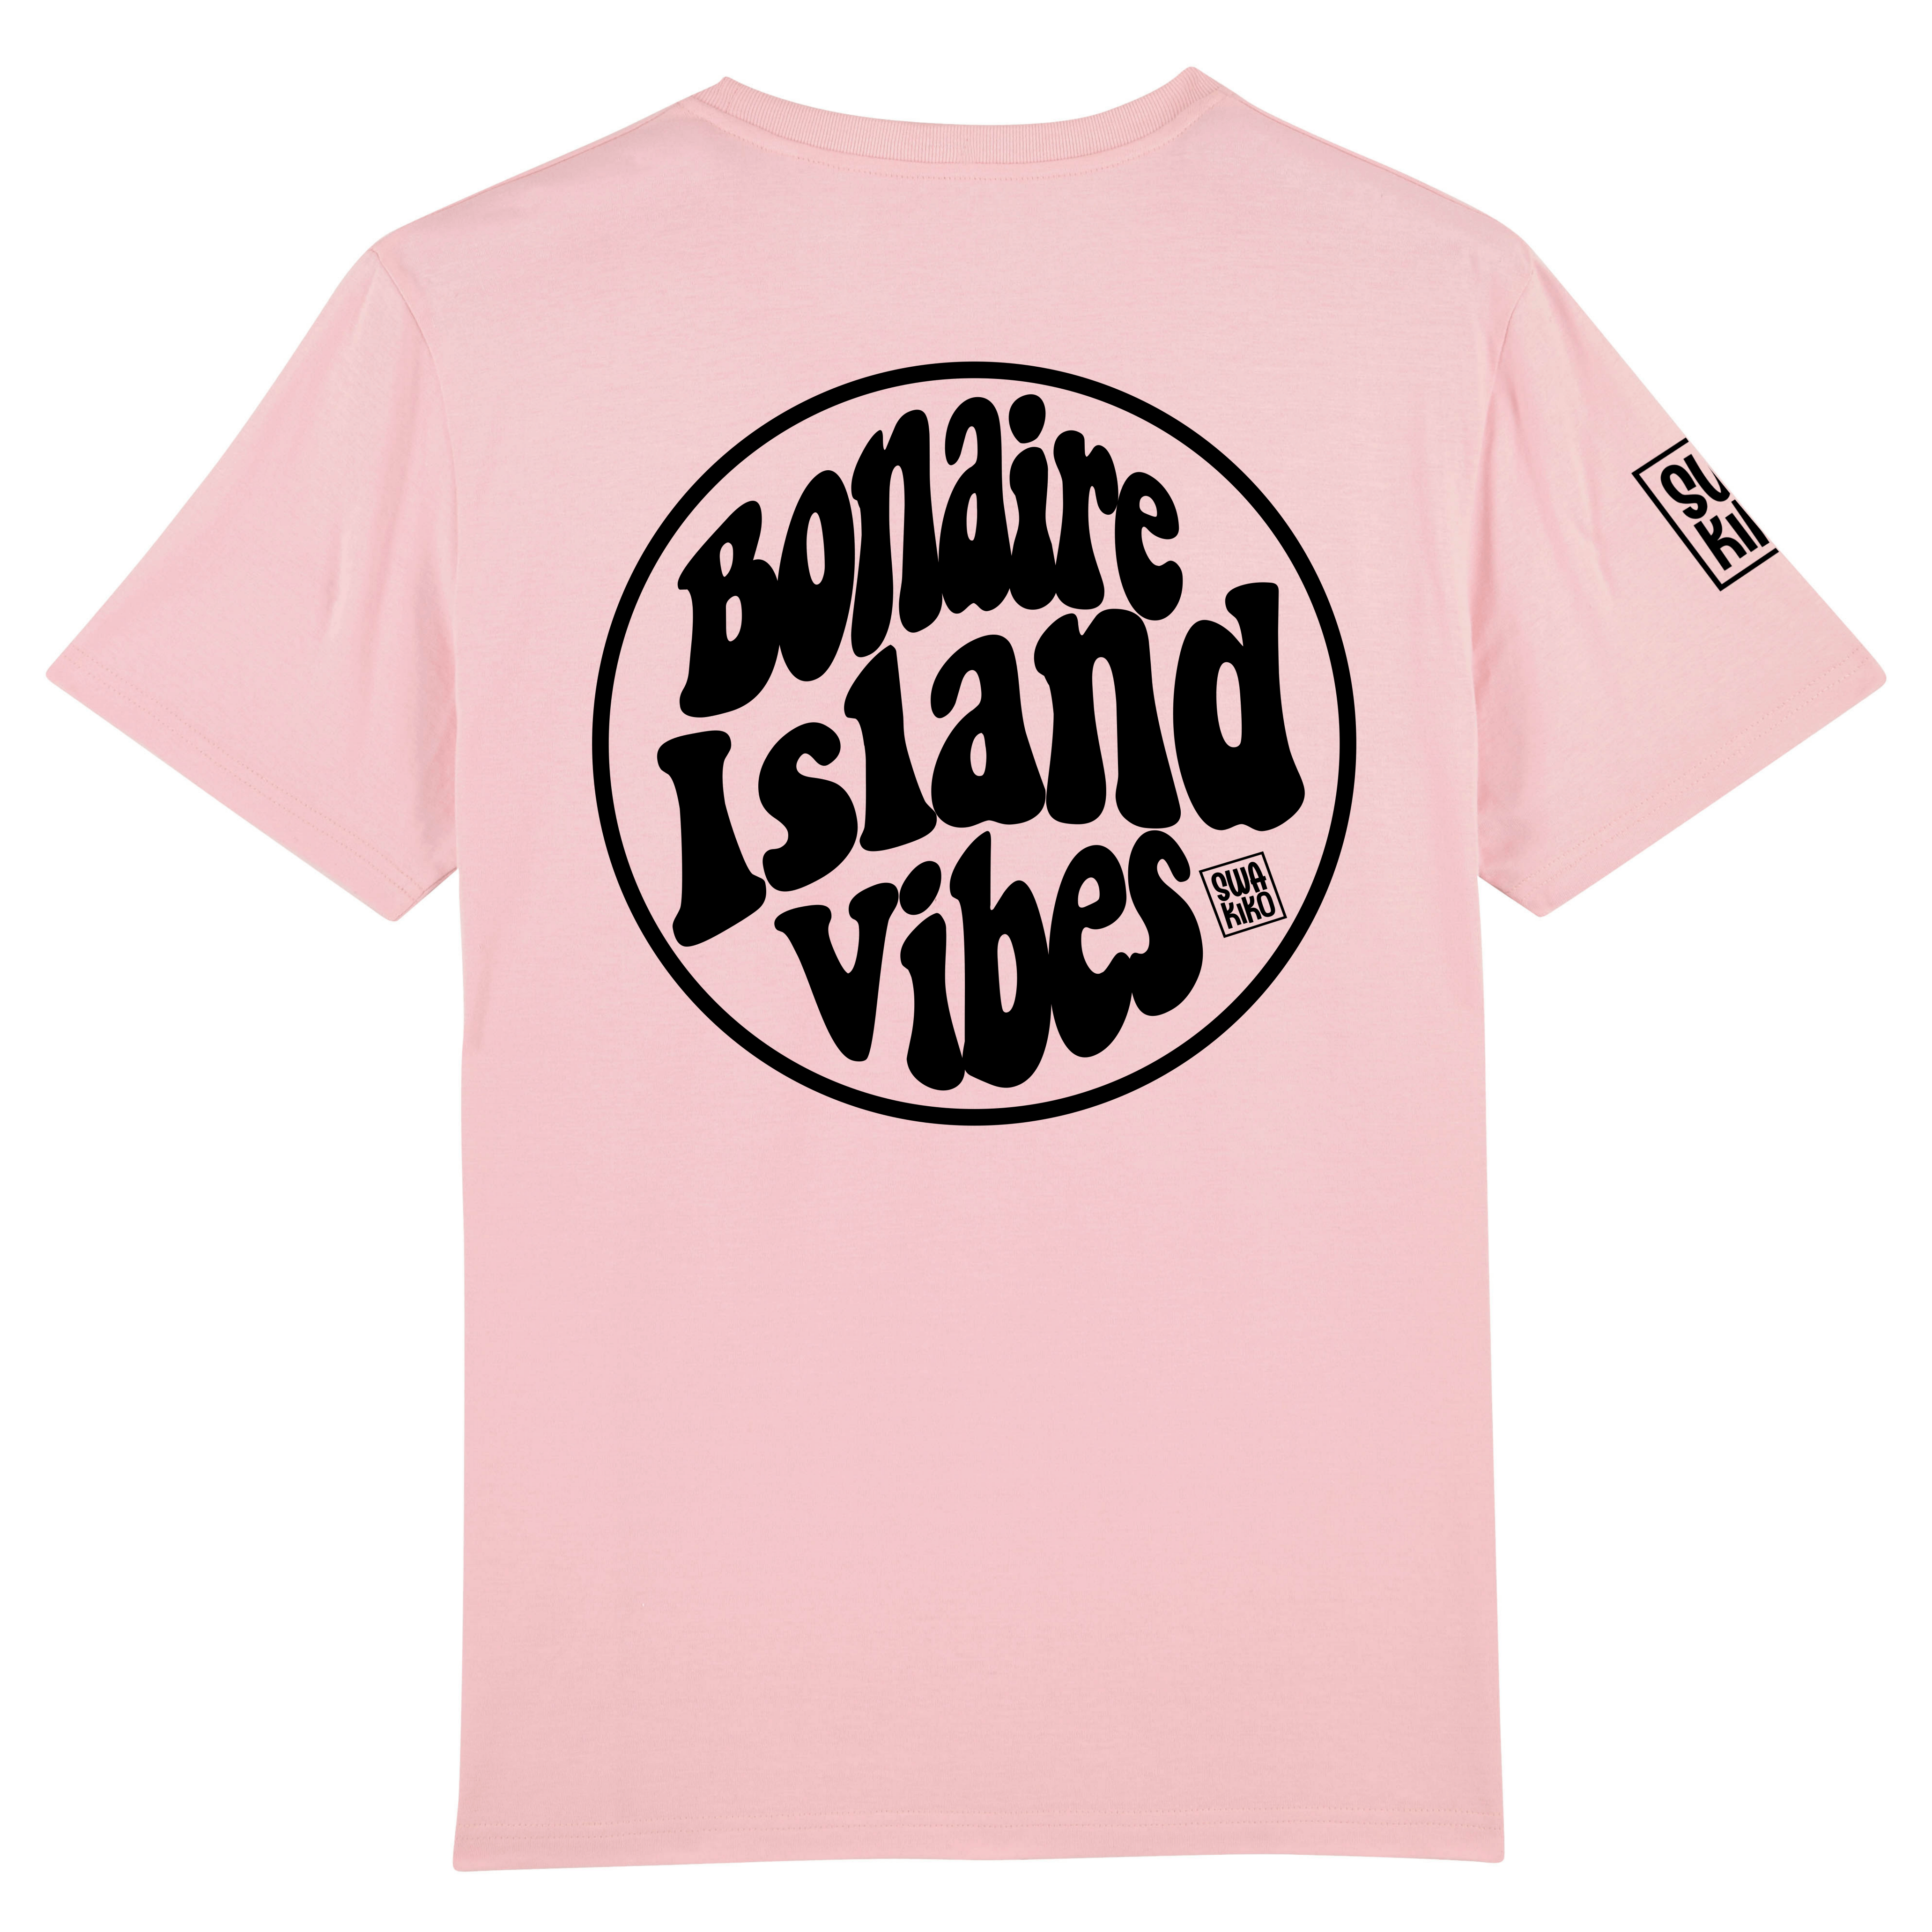 Bonaire Island Vibes T-shirt men, roze